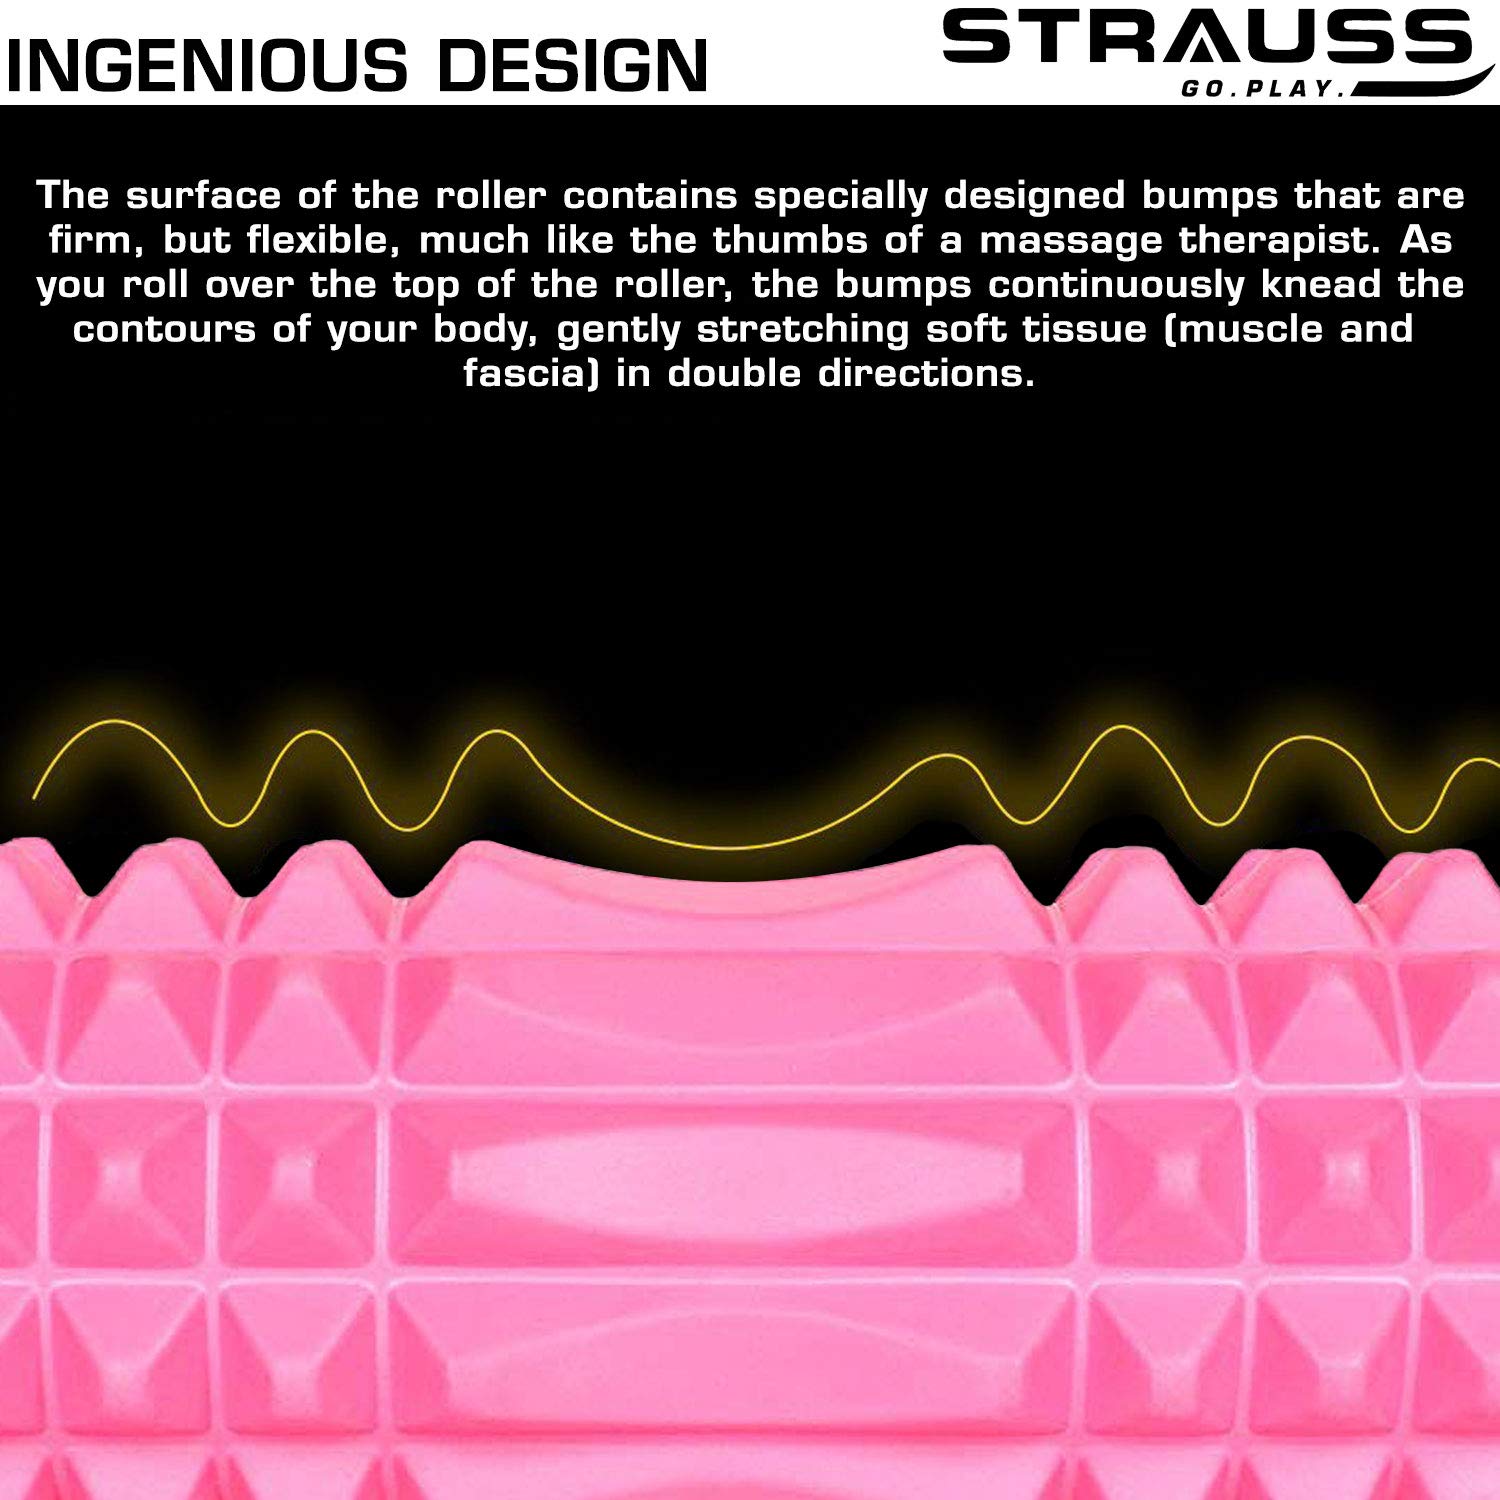 Strauss ST-1442 Grid Foam Roller (Pink), 33 cm and Foot/Hand Massage Roller